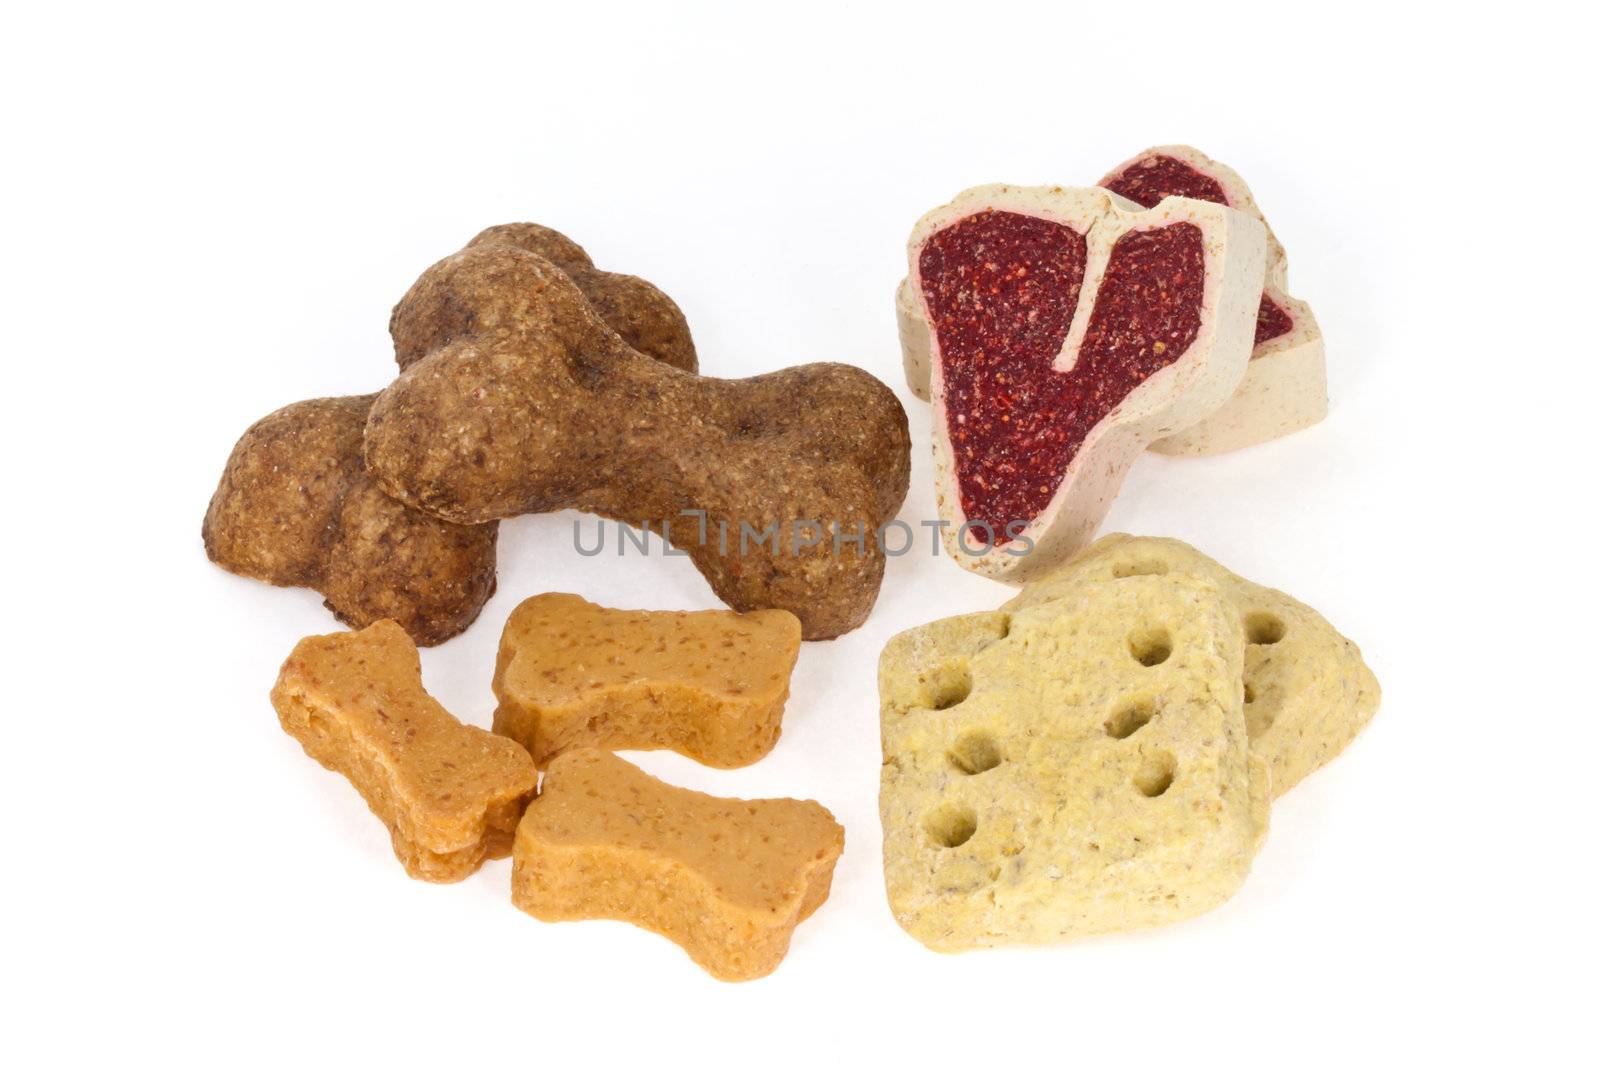 Assortment of dog treats by melpomene